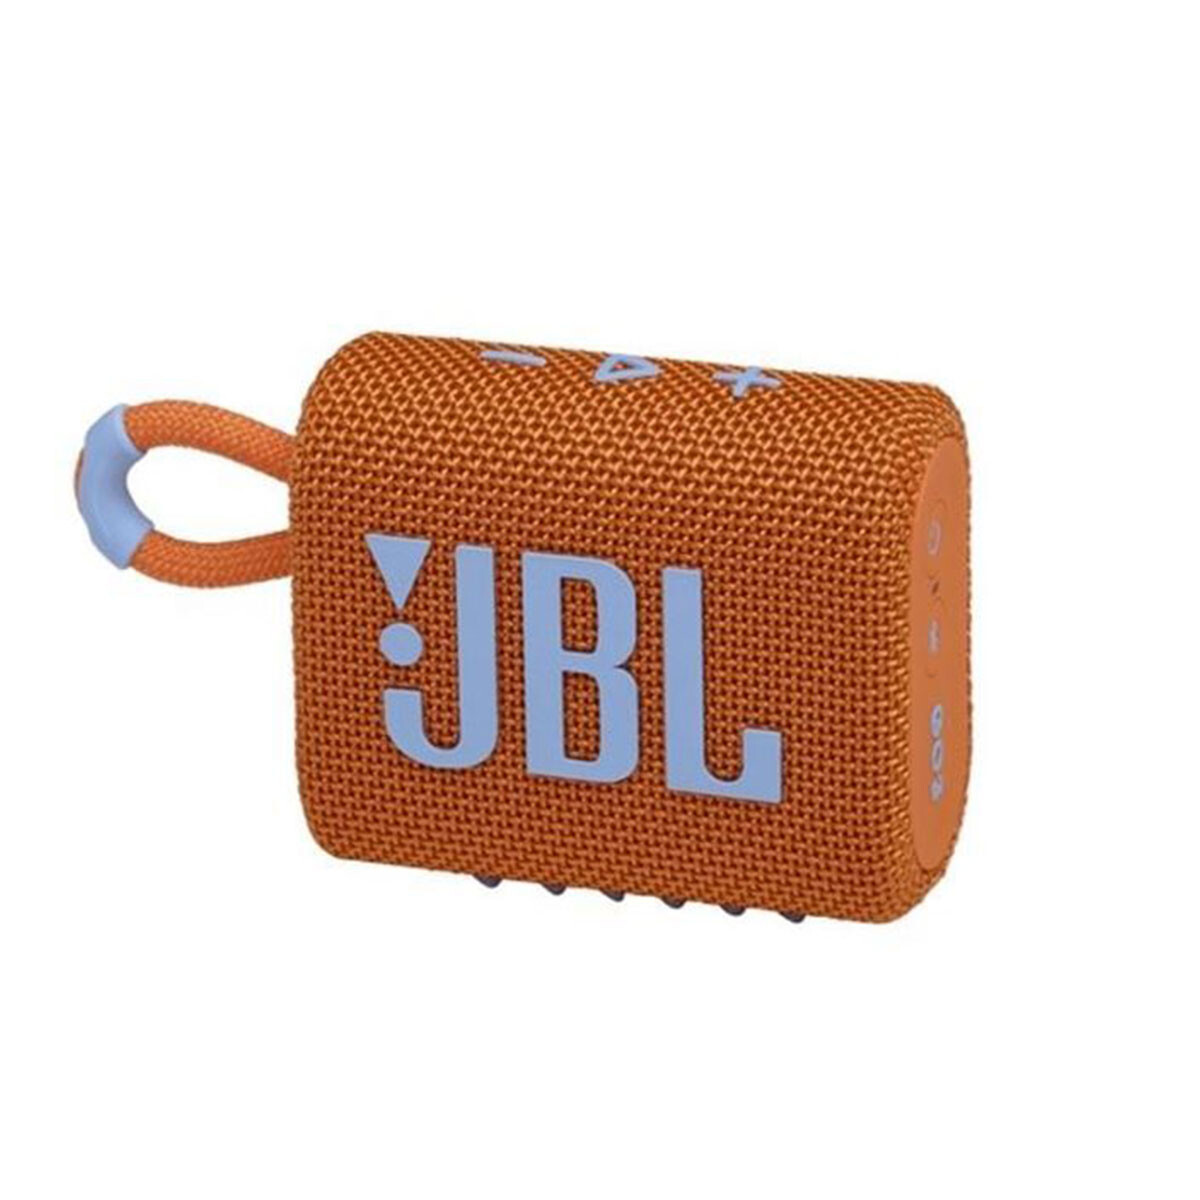 Reproductor Bt Jbl Go3 Naranja Y Azul 